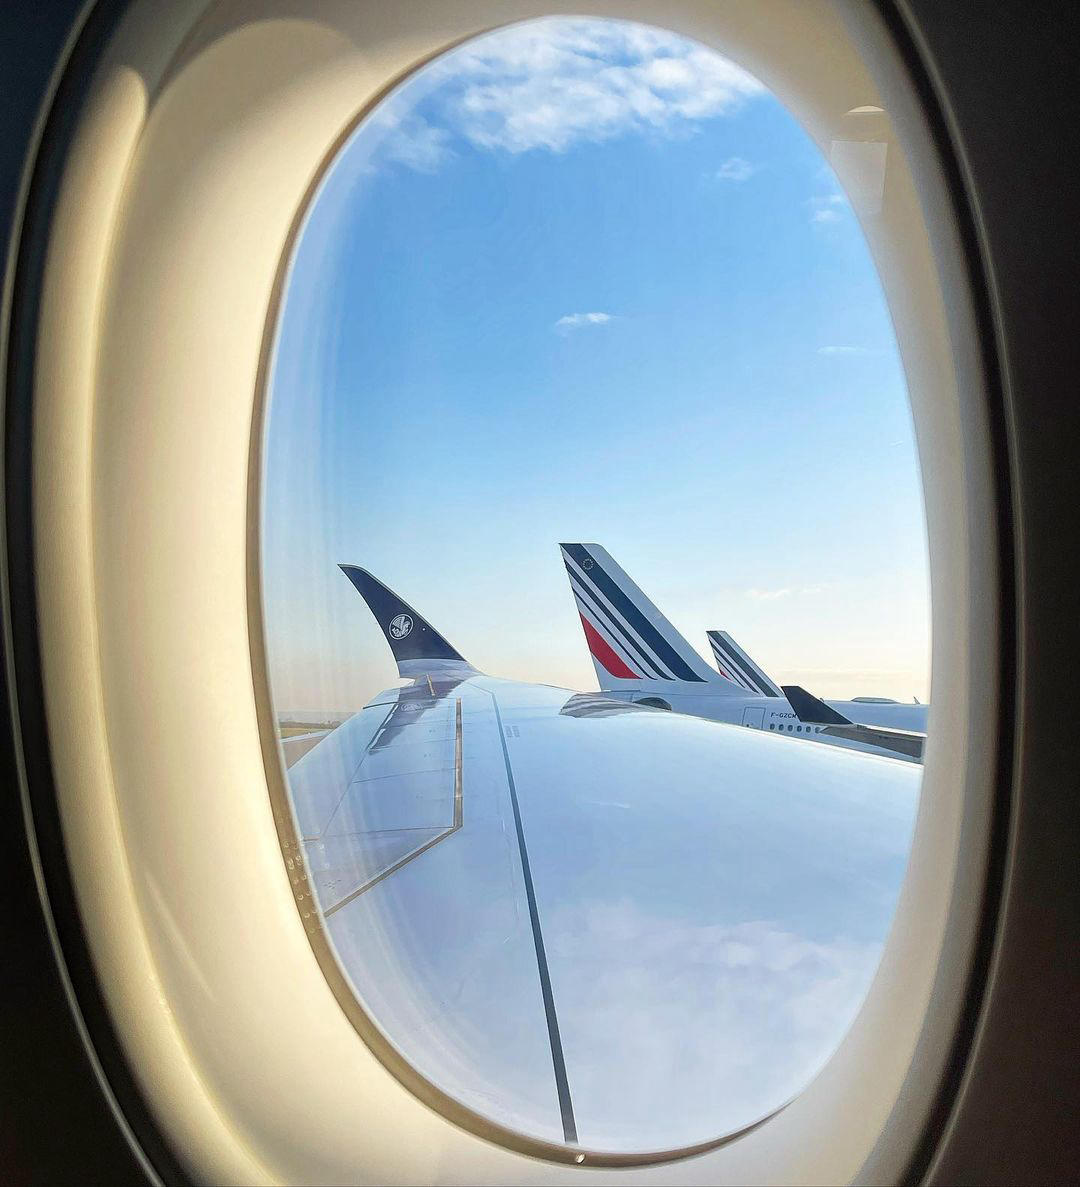 Air France - Le soleil hivernal illumine nos cabines